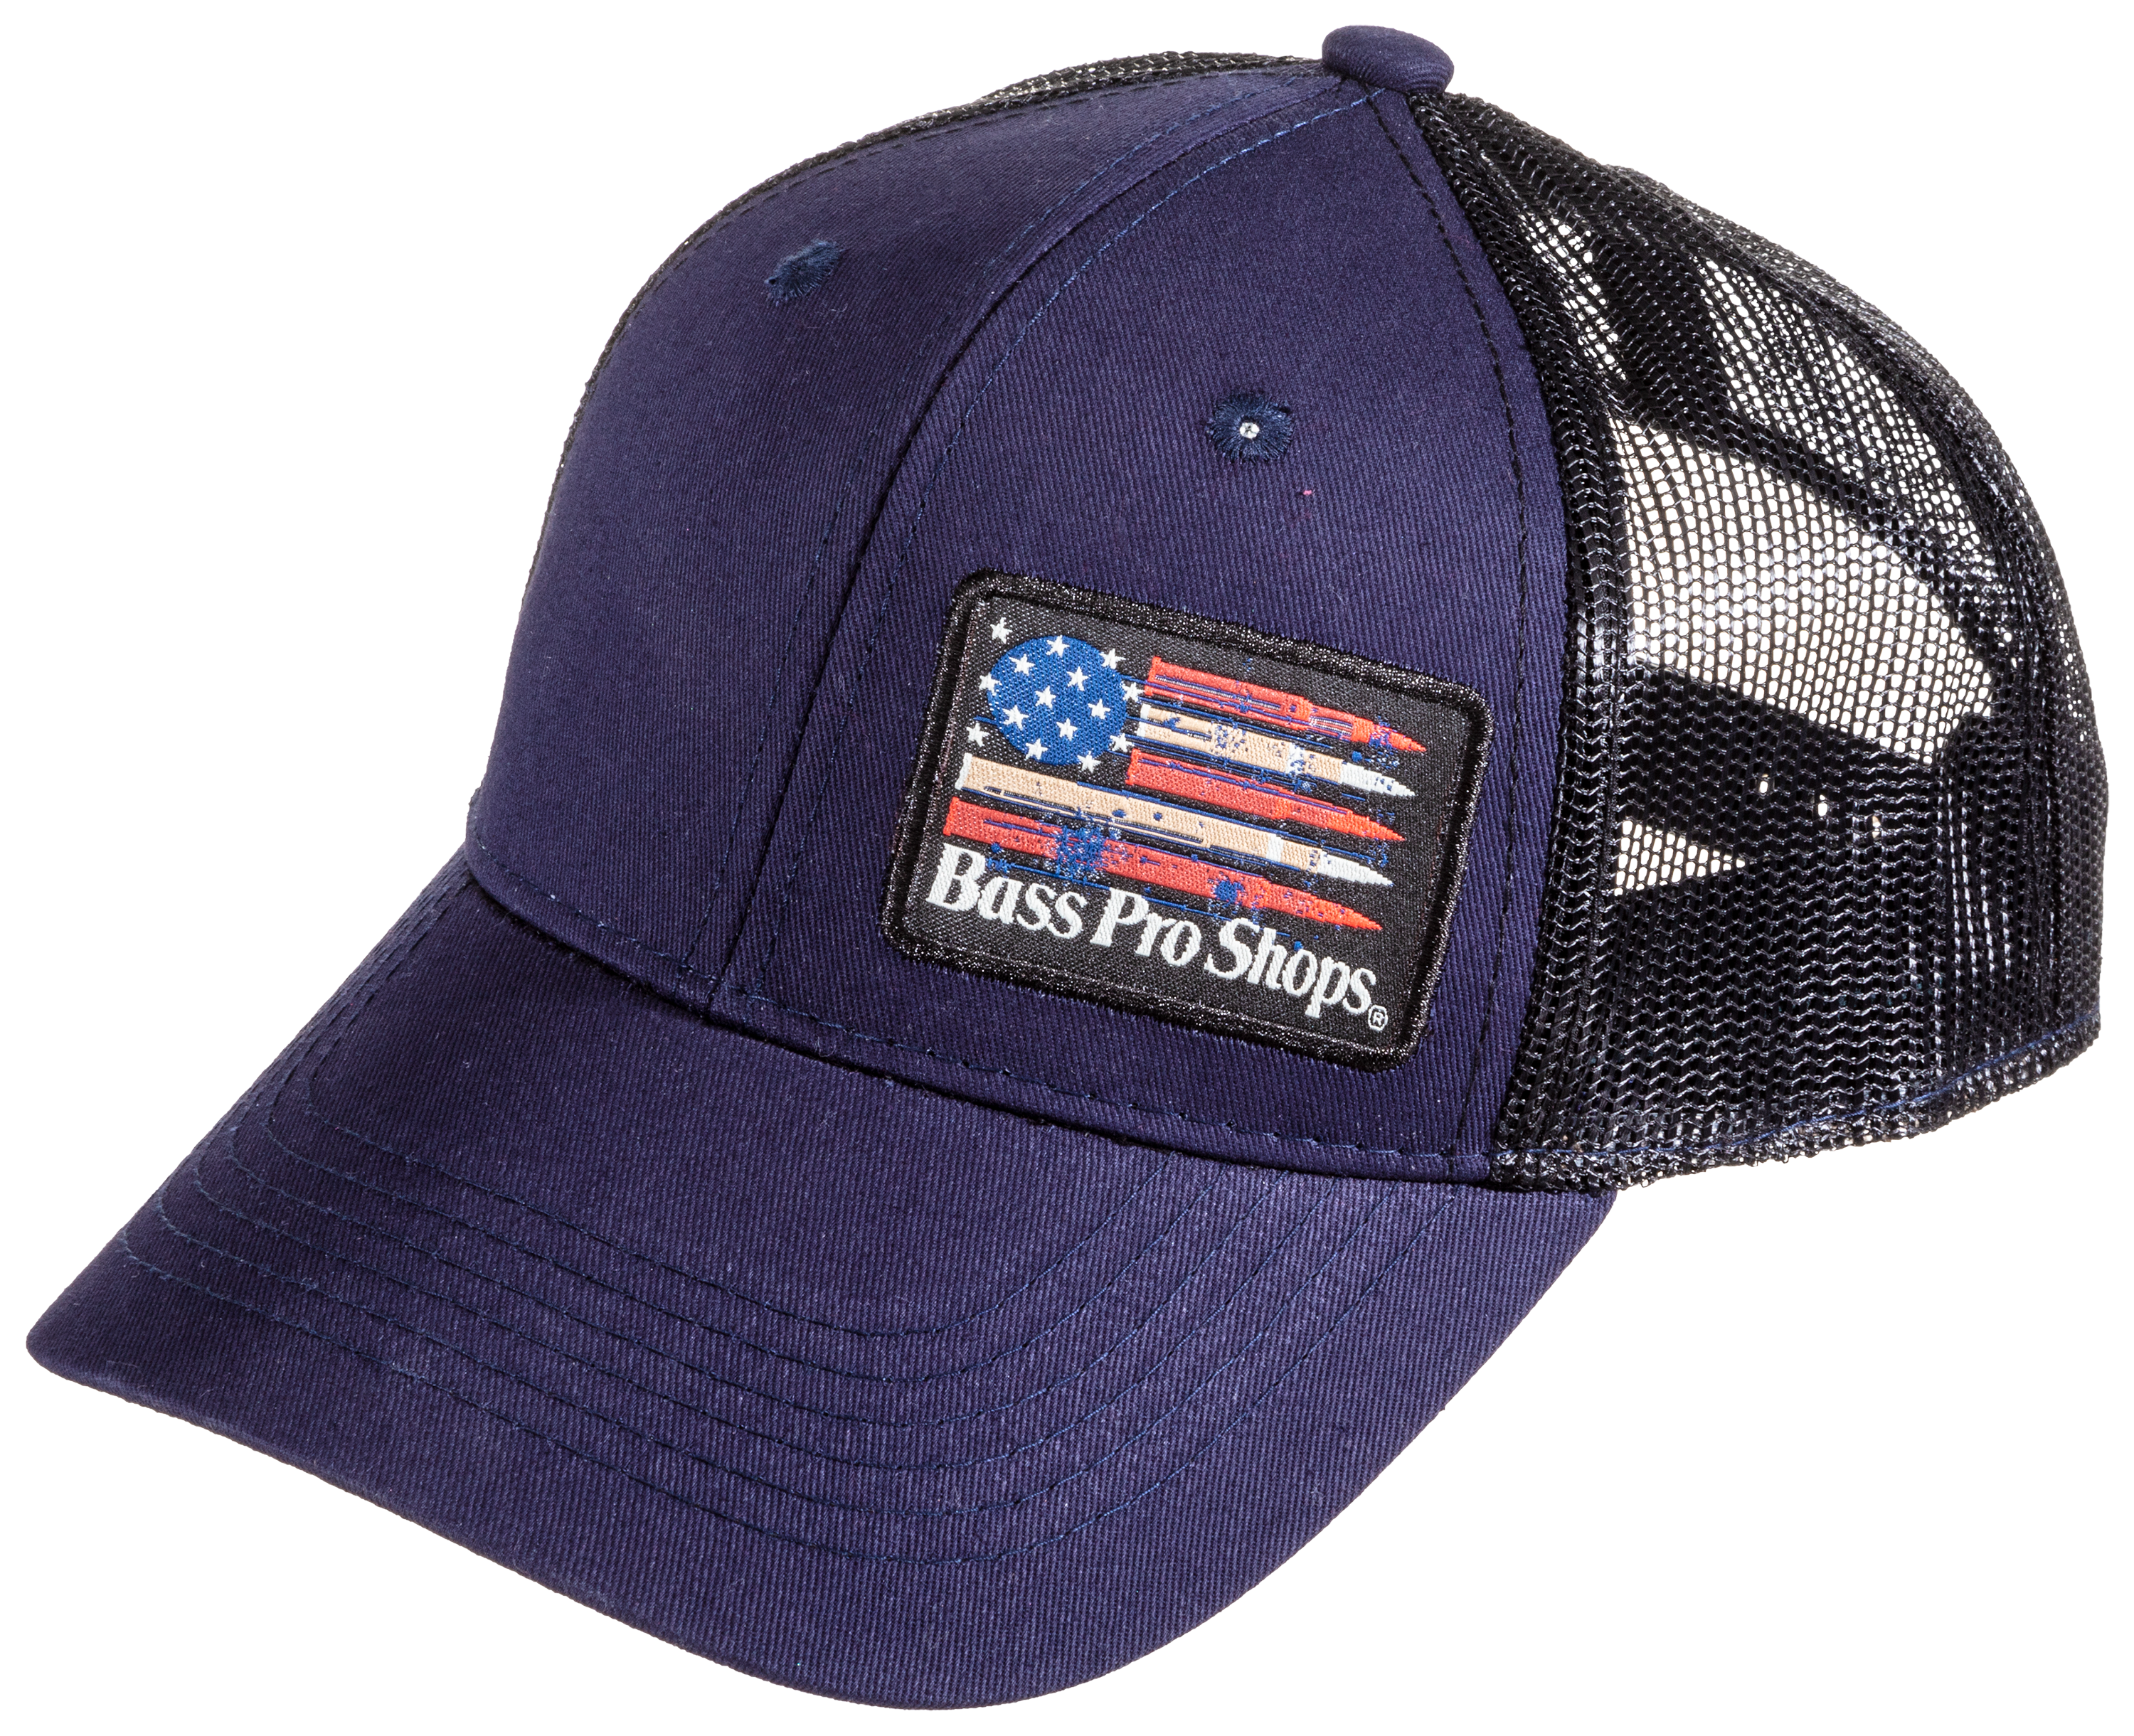 Bass Pro Shops USA Flag Patch Mesh Back Cap